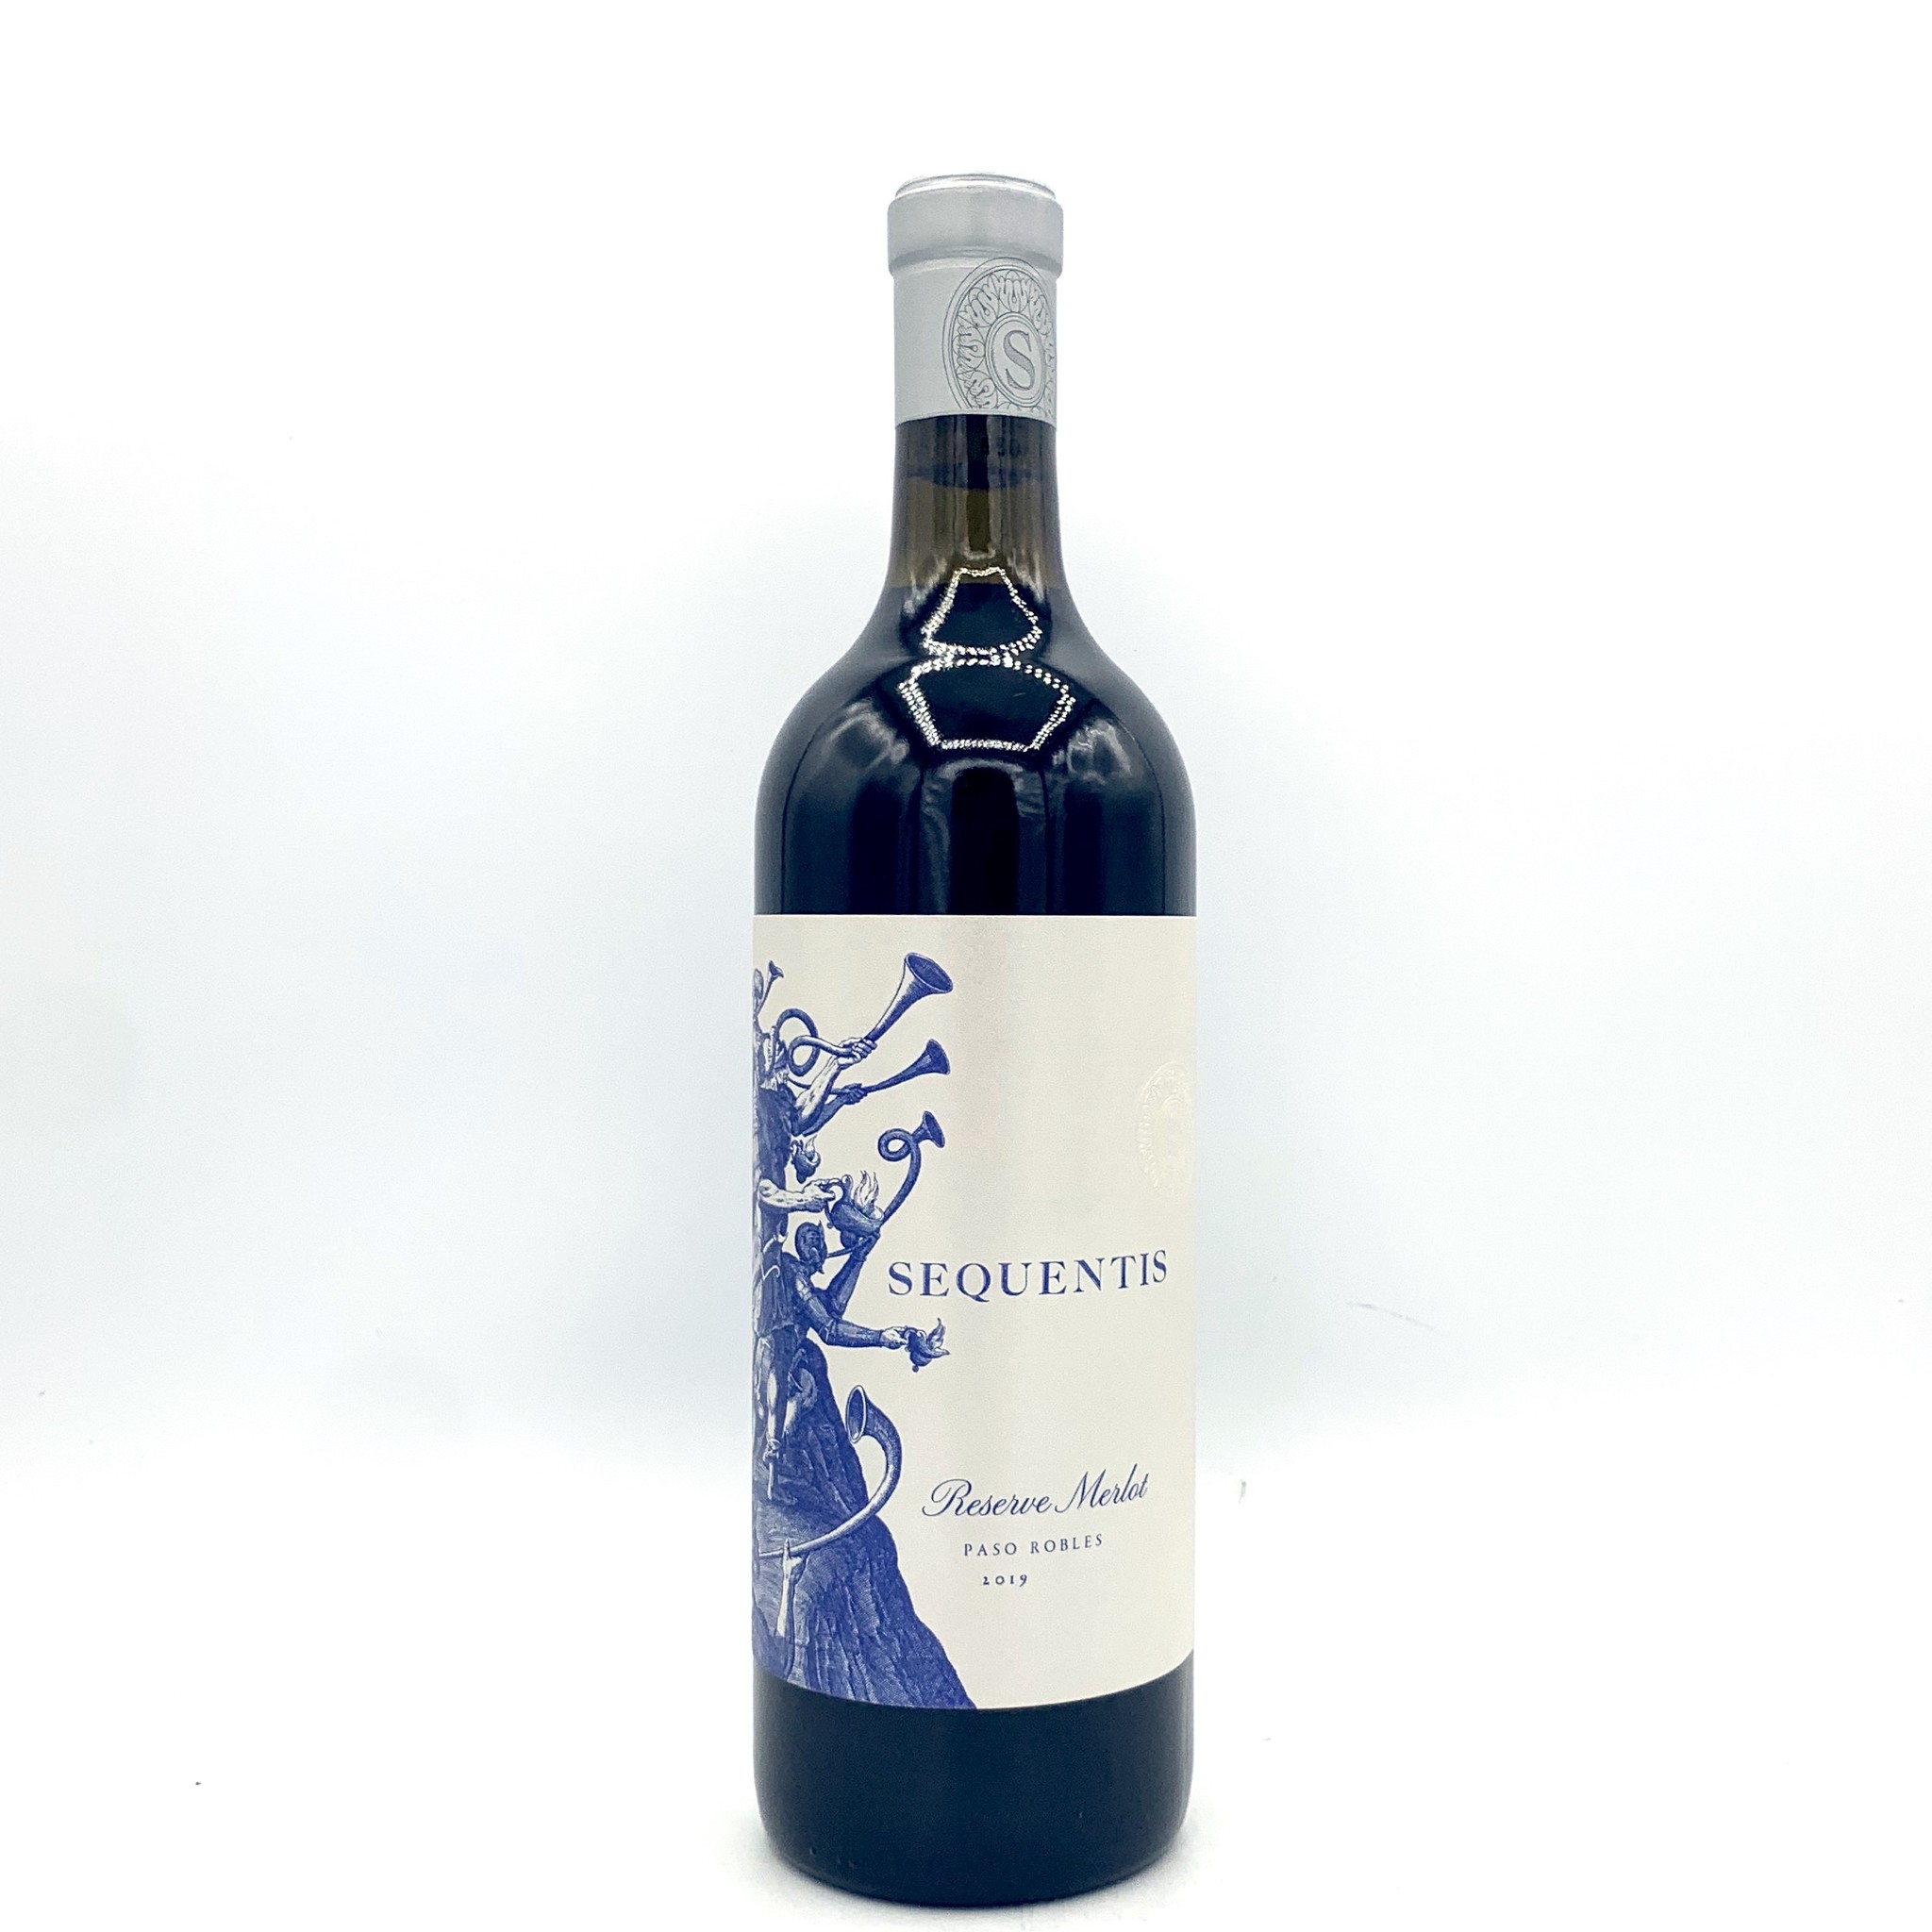 Bernardus Winery - Products - Merlot-2019 Merlot